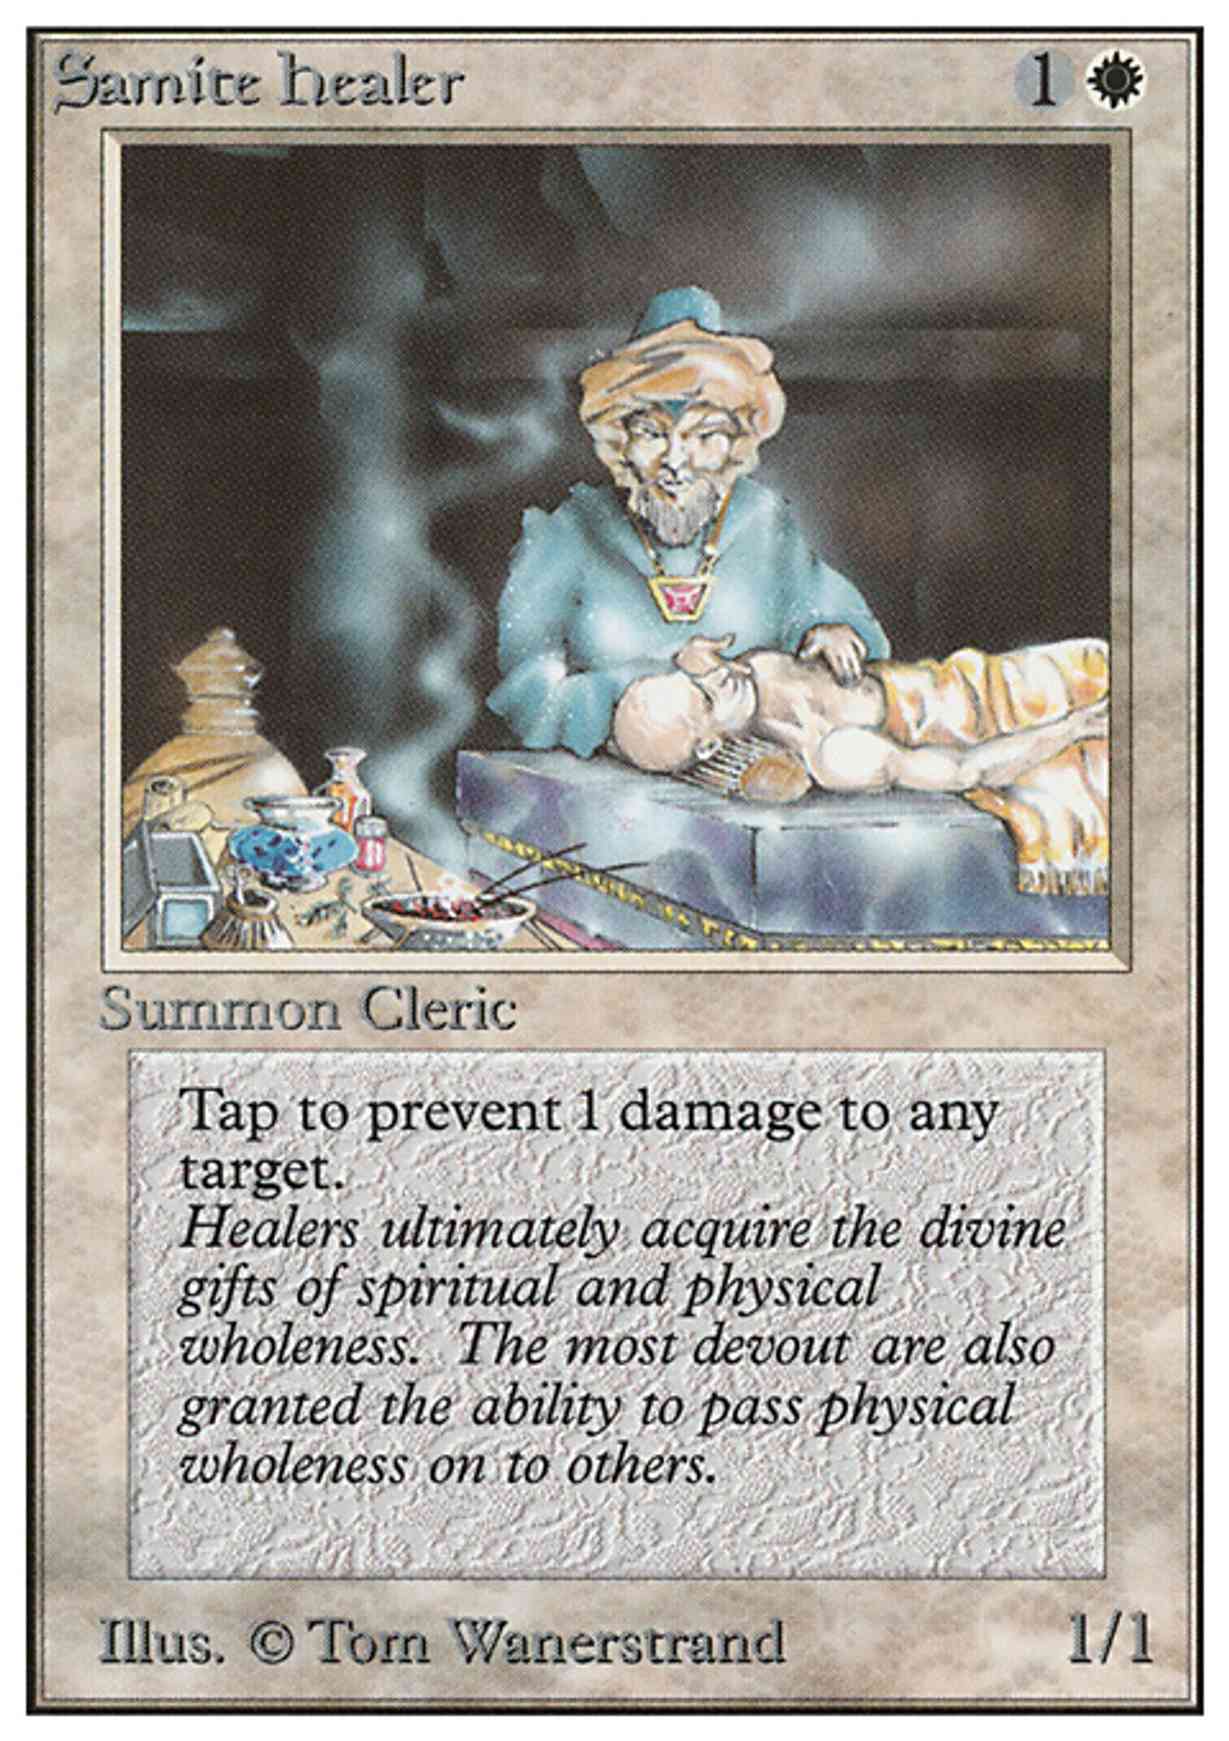 Samite Healer magic card front